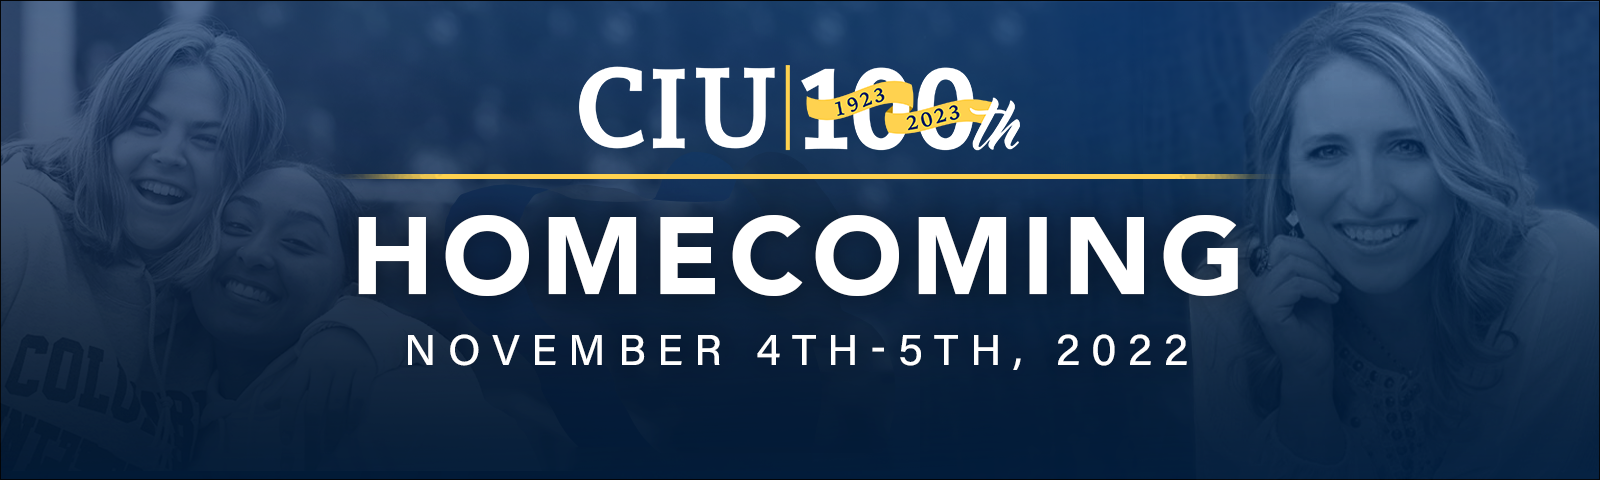 2022 Homecoming & CIU 100th Anniversary Celebration Nov 4-5, 2022